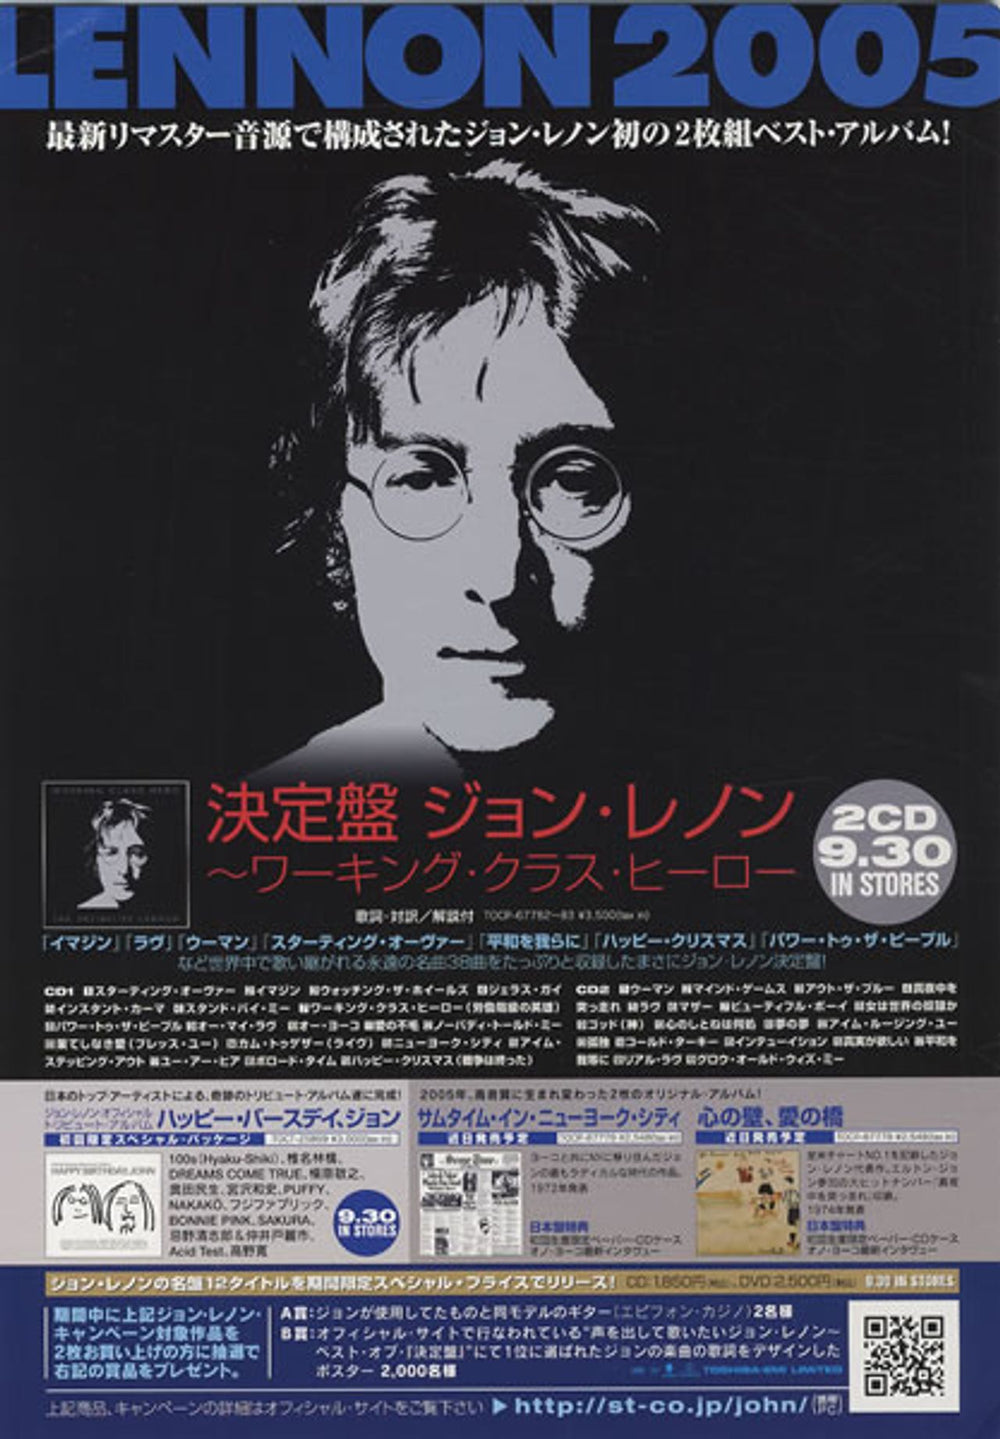 John Lennon Lennon 2005 Japanese Promo display PROMO DISPLAY